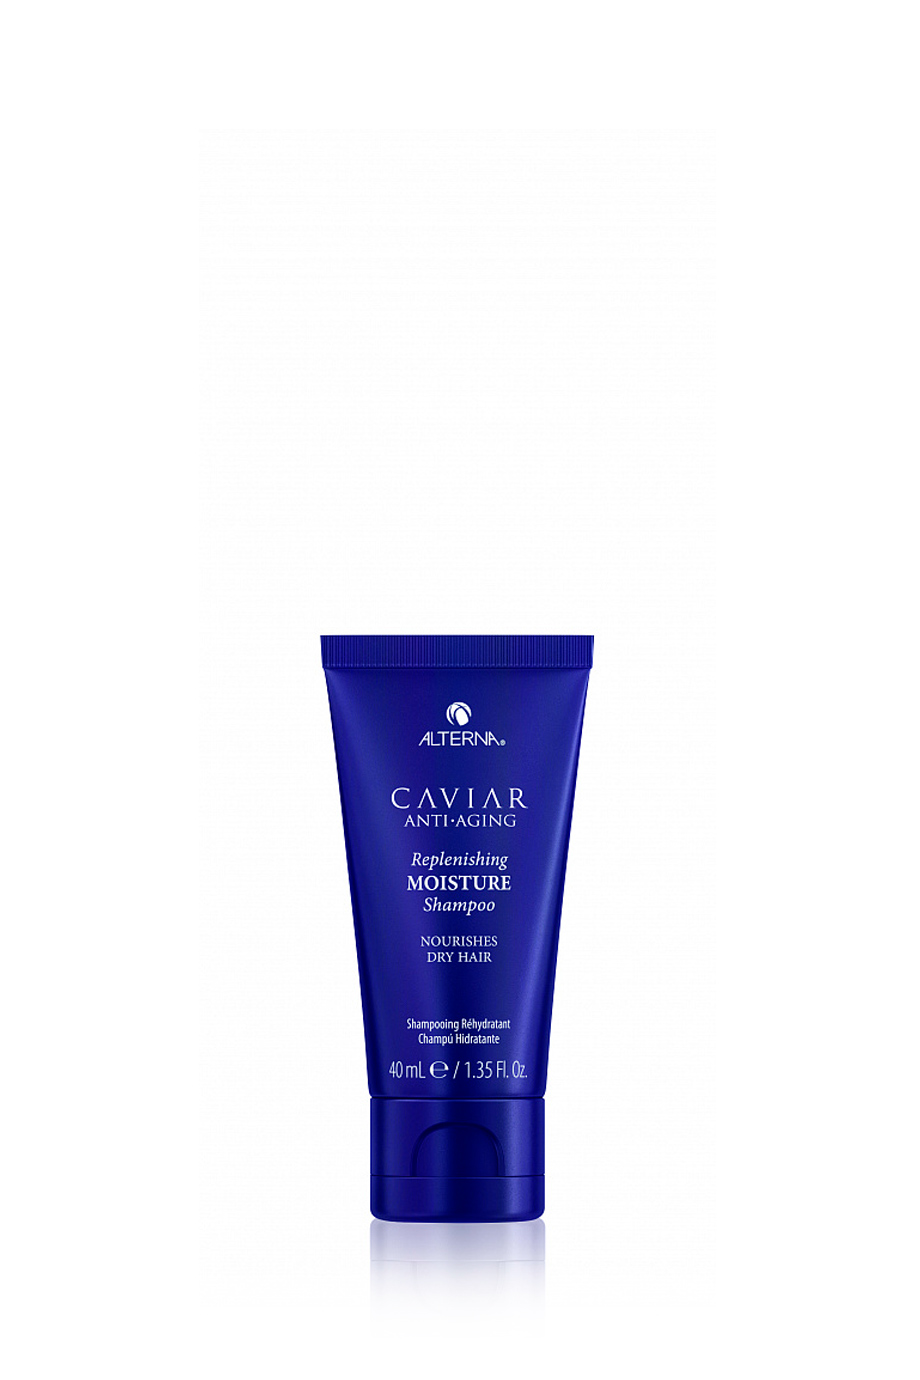 Alterna Caviar Anti-Aging Replenishing Moisture Shampoo NEW 40 ml